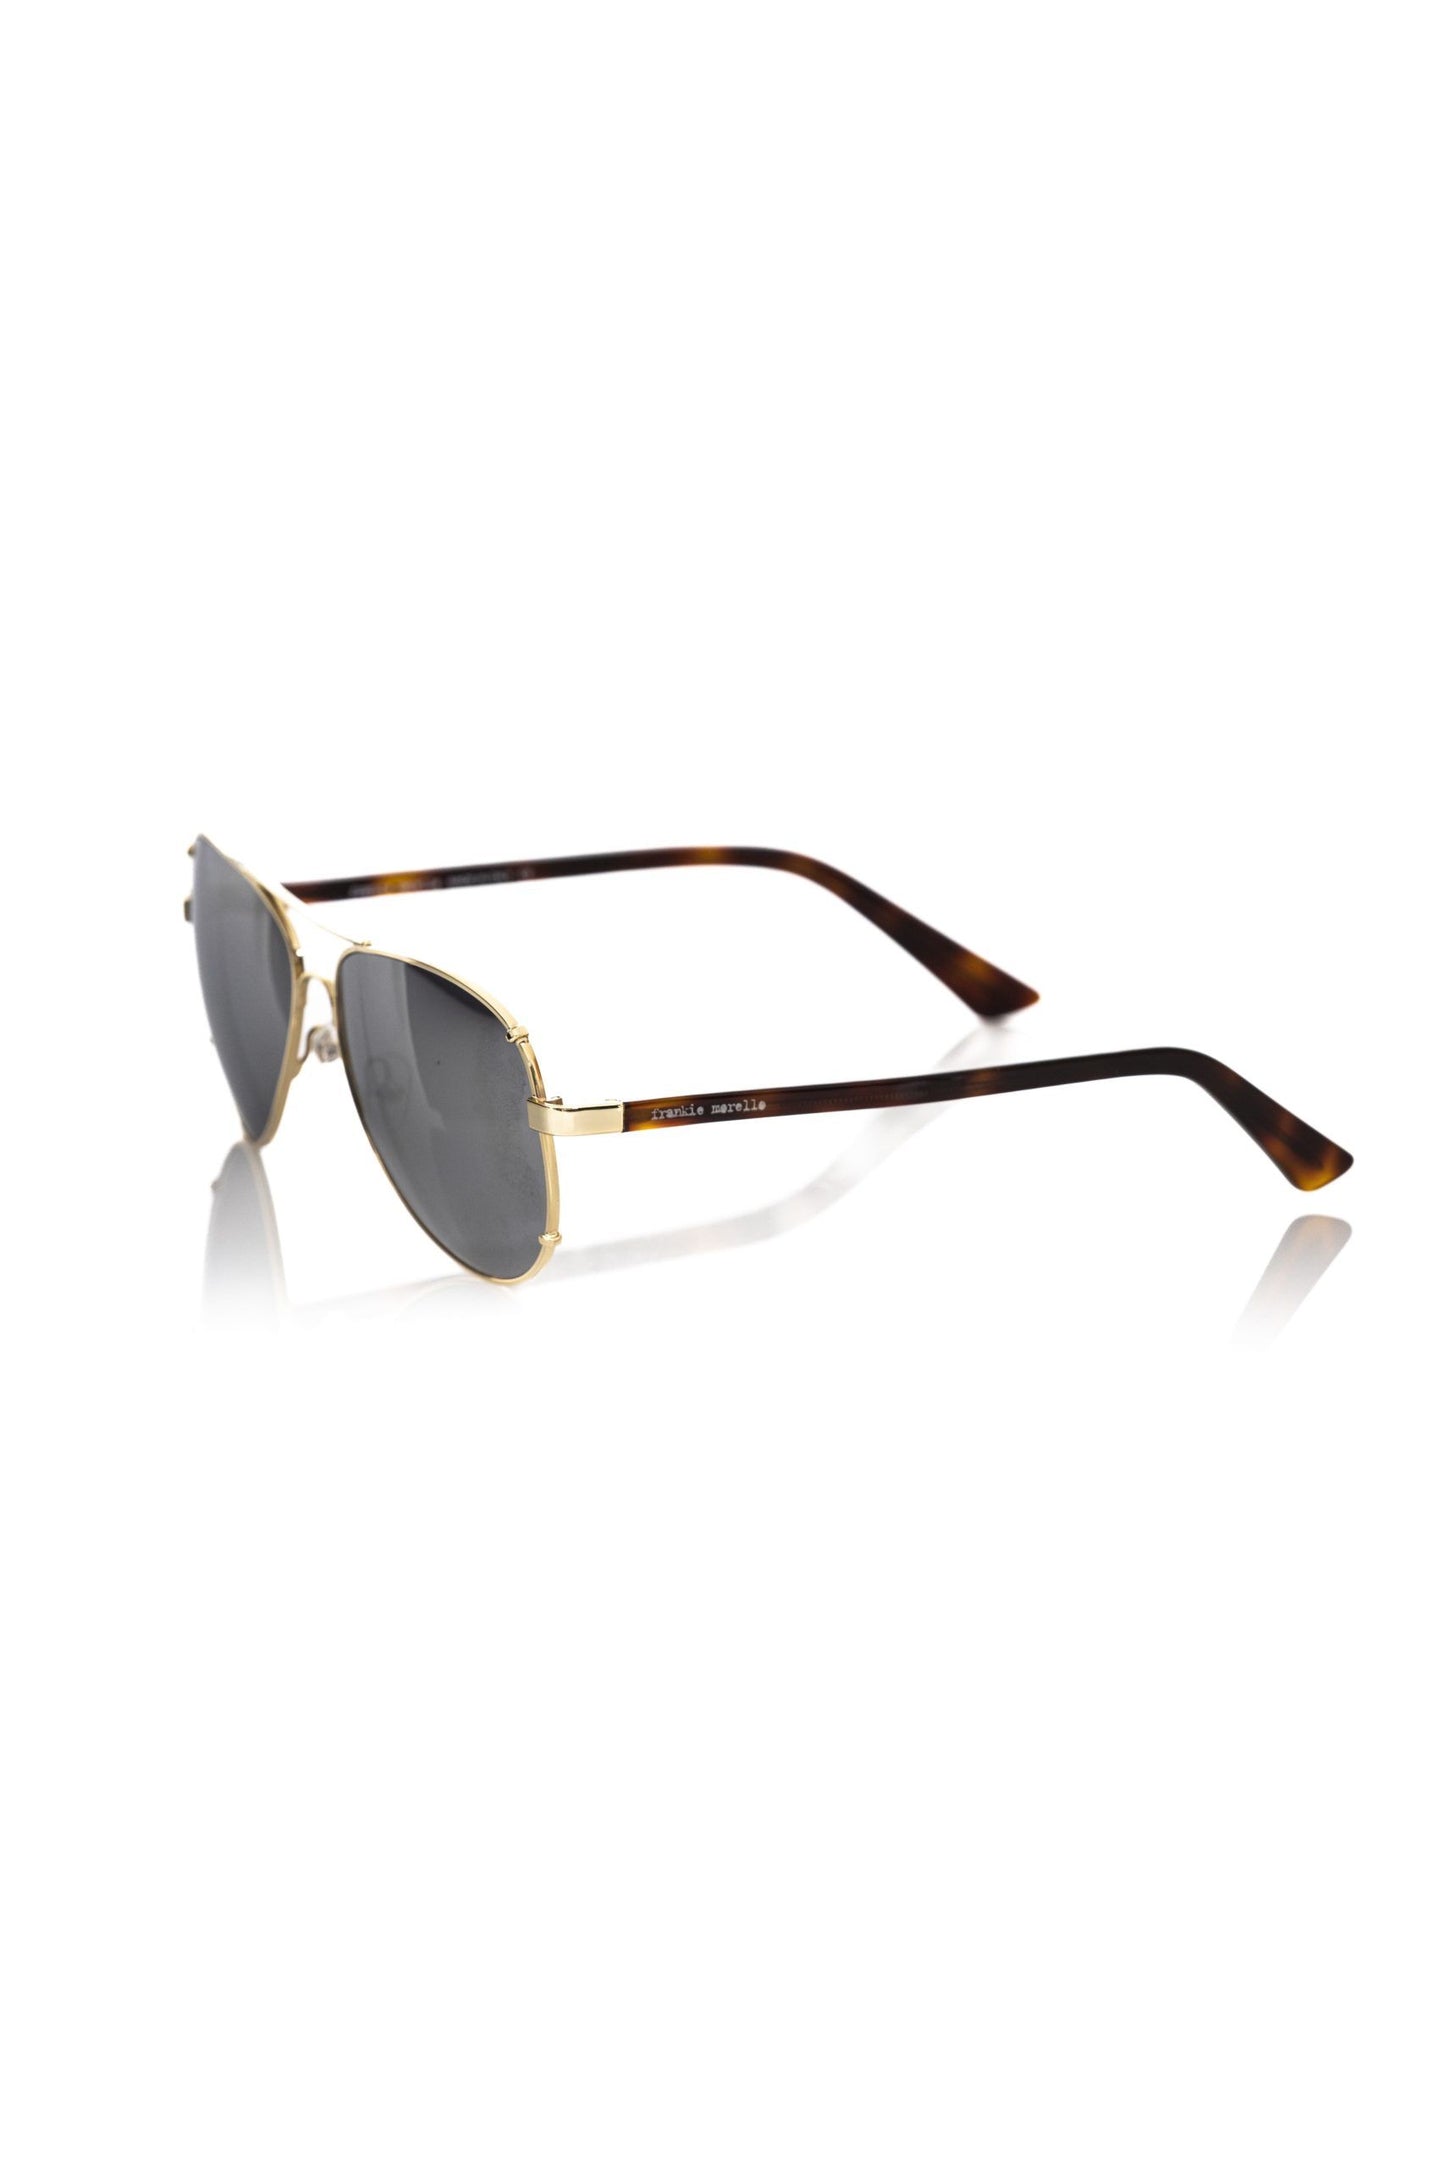 Frankie Morello FRMO-22122 Gold Metallic Fibre Sunglasses